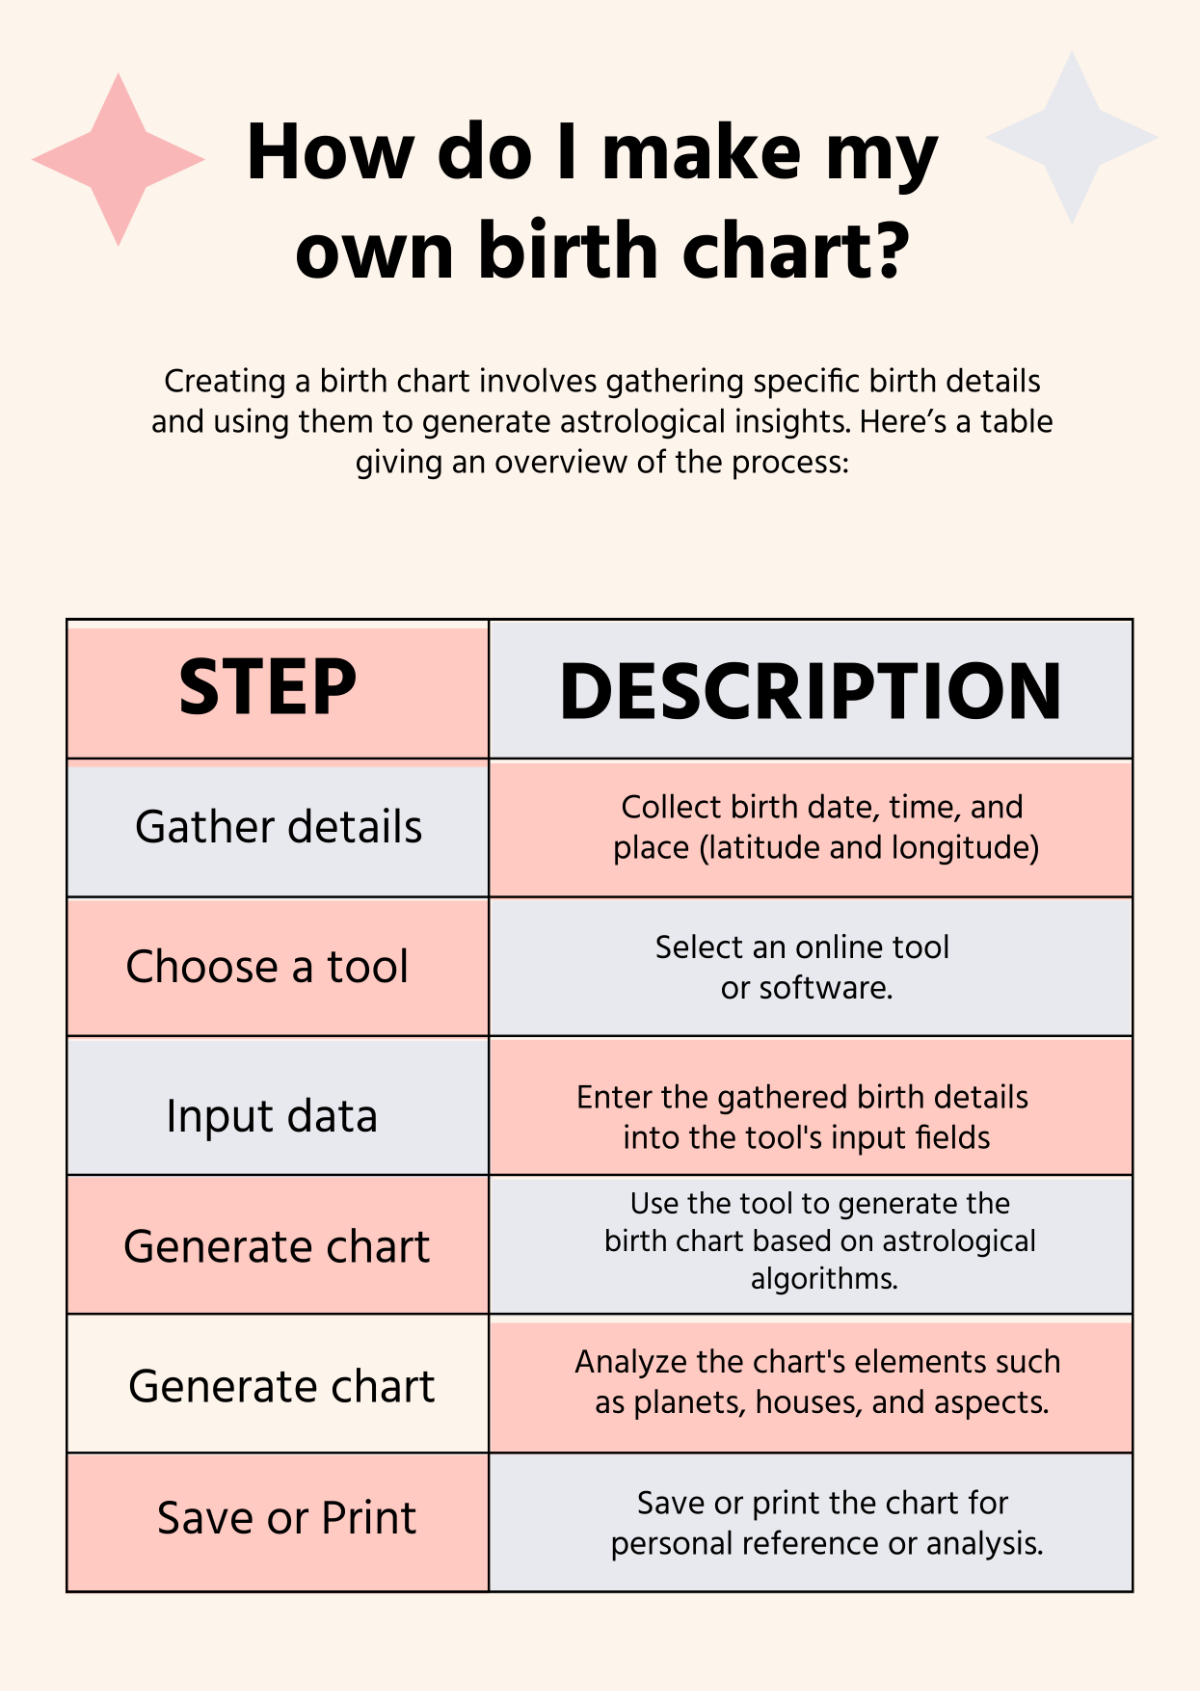 How do I Make My Own Birth Chart%3F